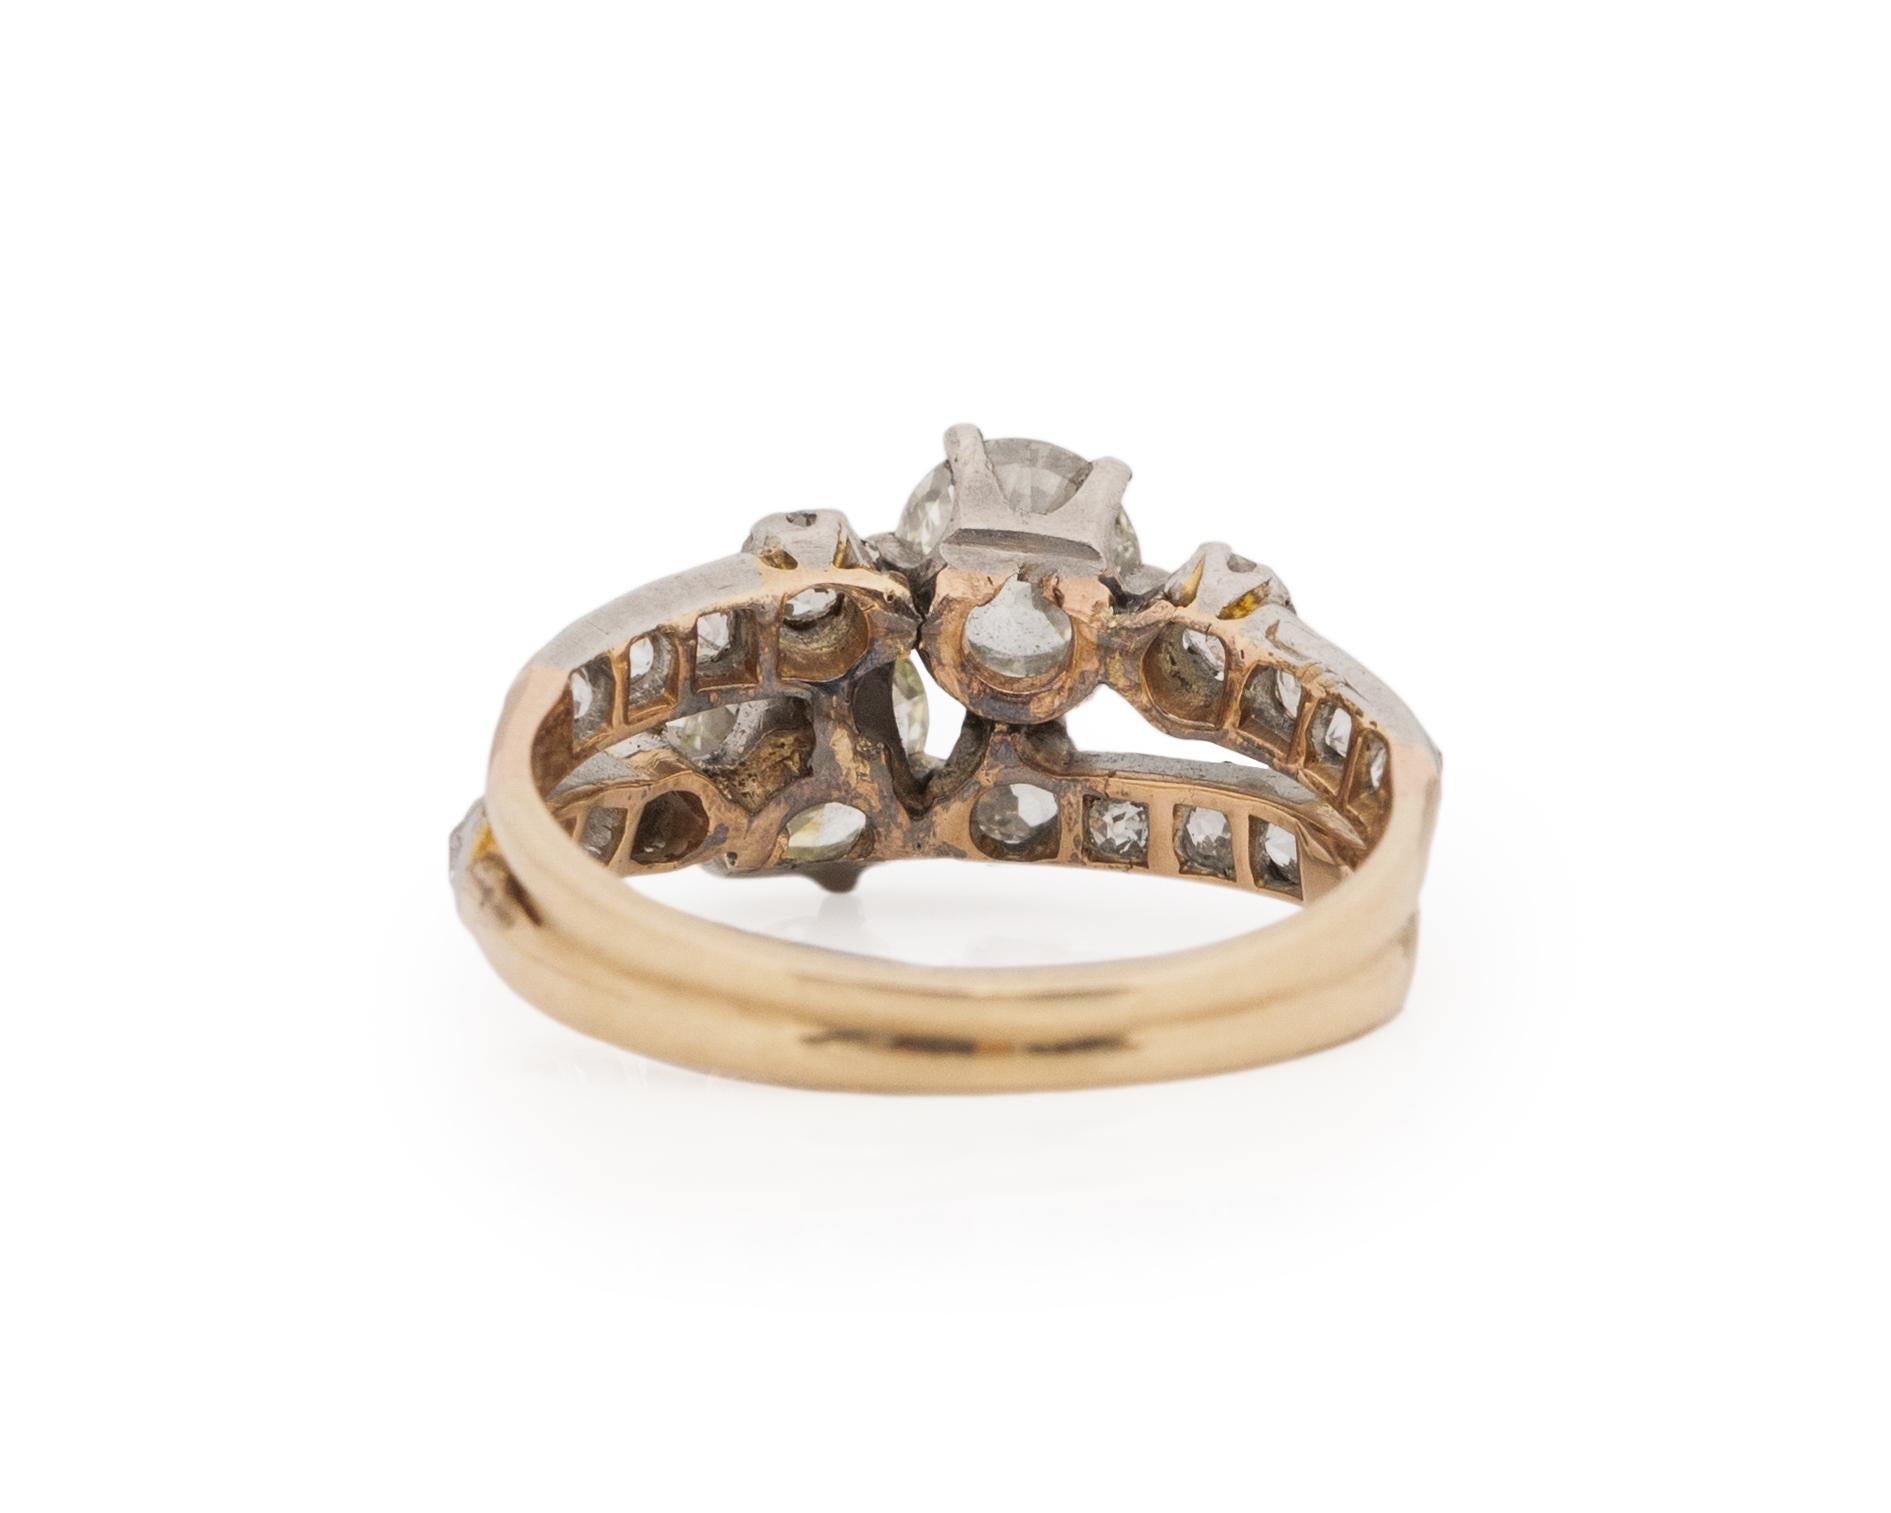 1.06 Carat Total Weight Edwardian Diamond 14 Karat Gold/Platinum Engagement Ring In Good Condition For Sale In Atlanta, GA